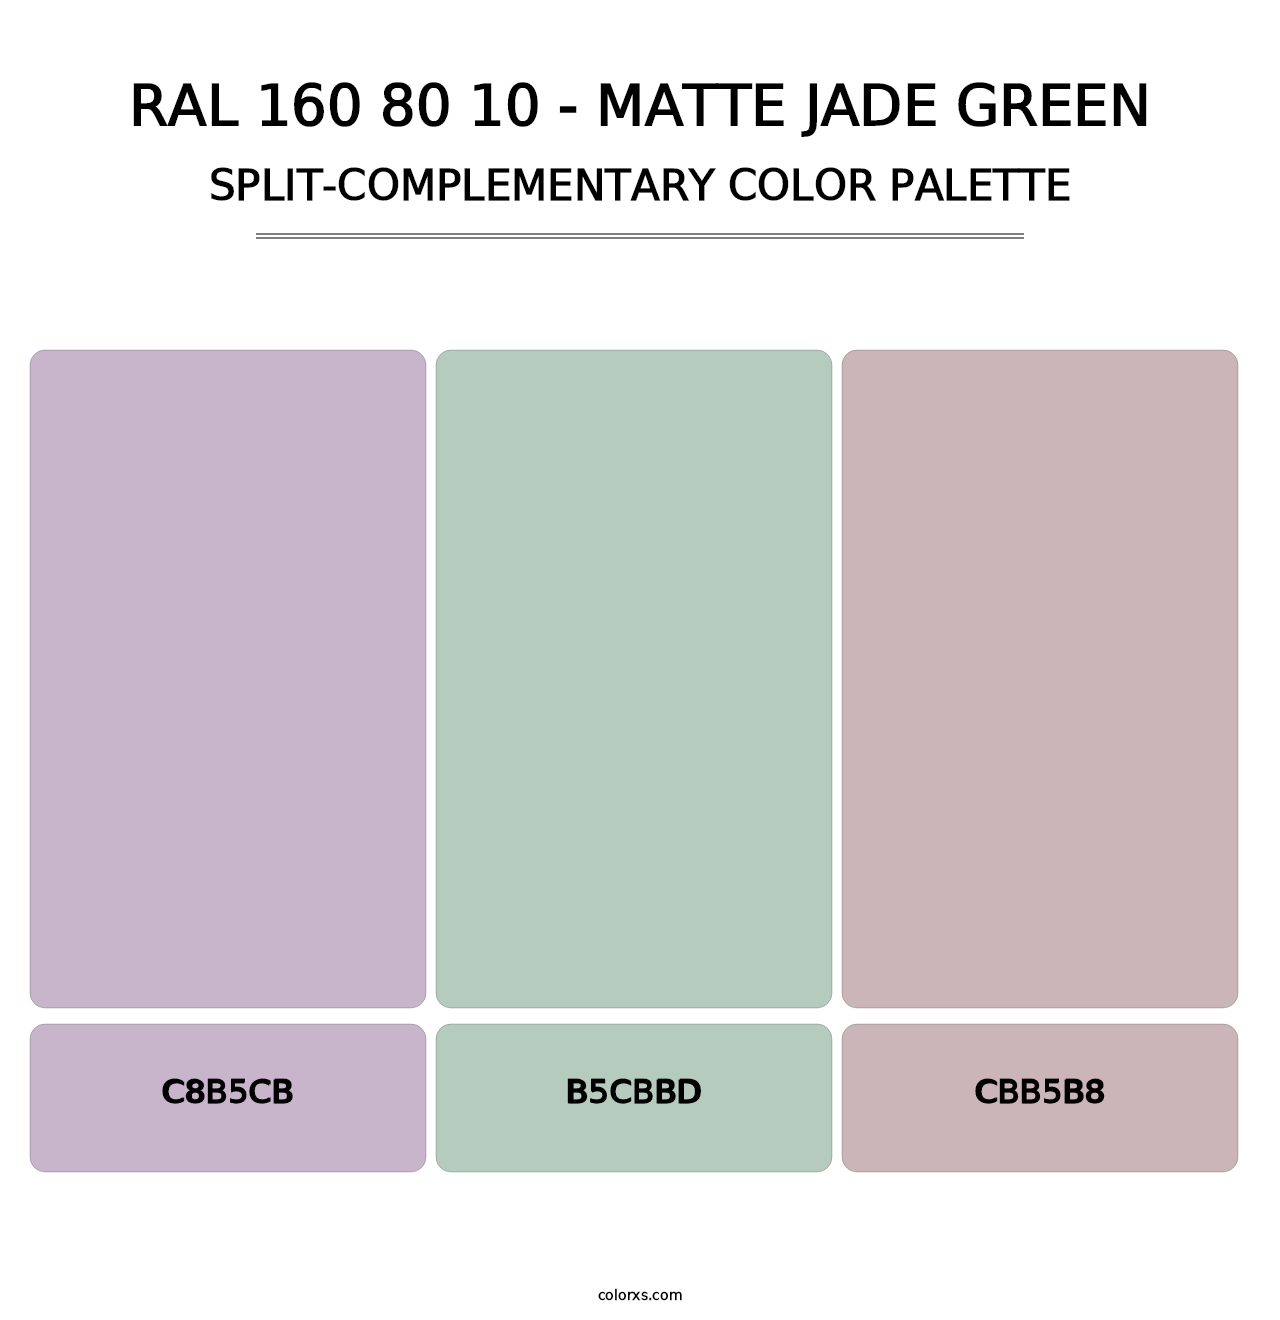 RAL 160 80 10 - Matte Jade Green - Split-Complementary Color Palette